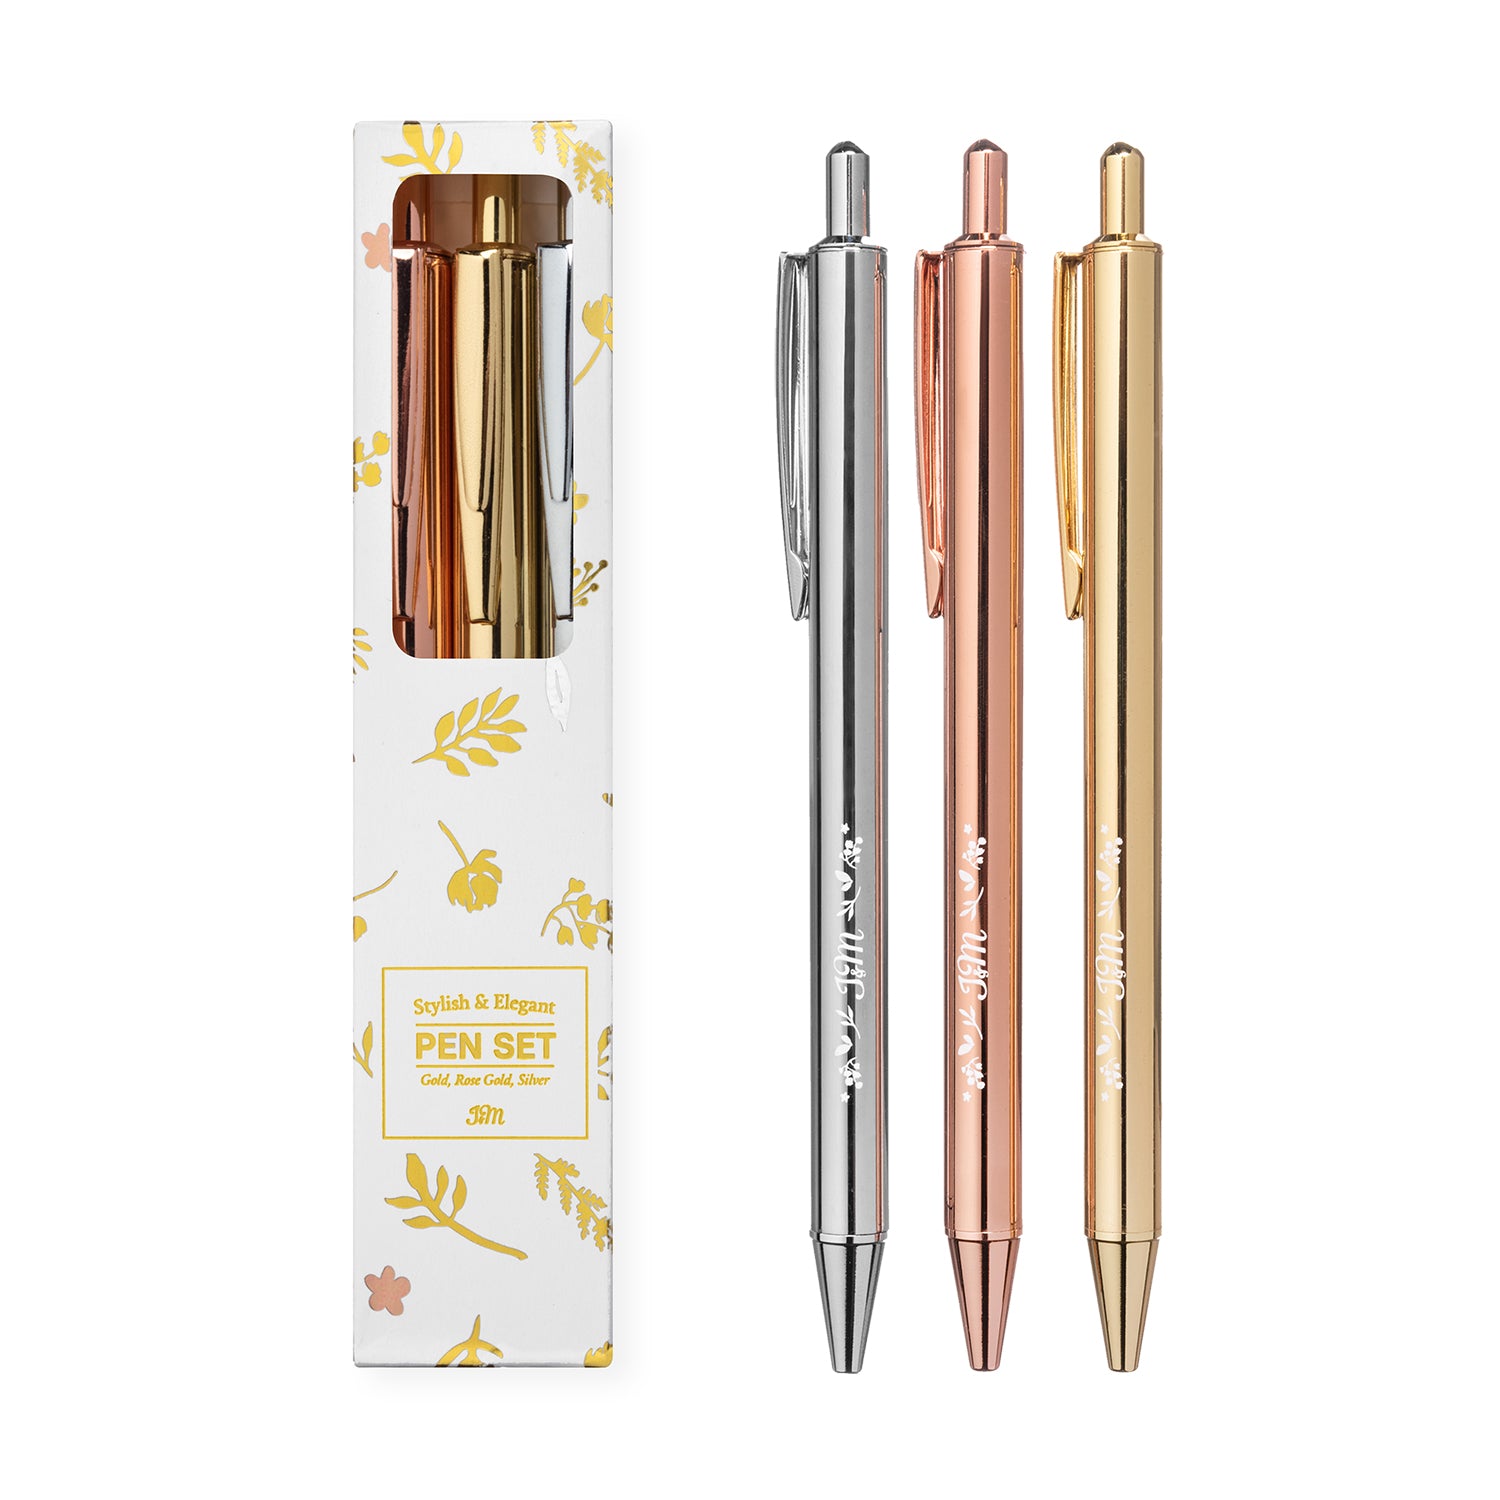 Floral Pencils | Set of Six Premium Wood Pencils with Decorative Flower  Themed Designs